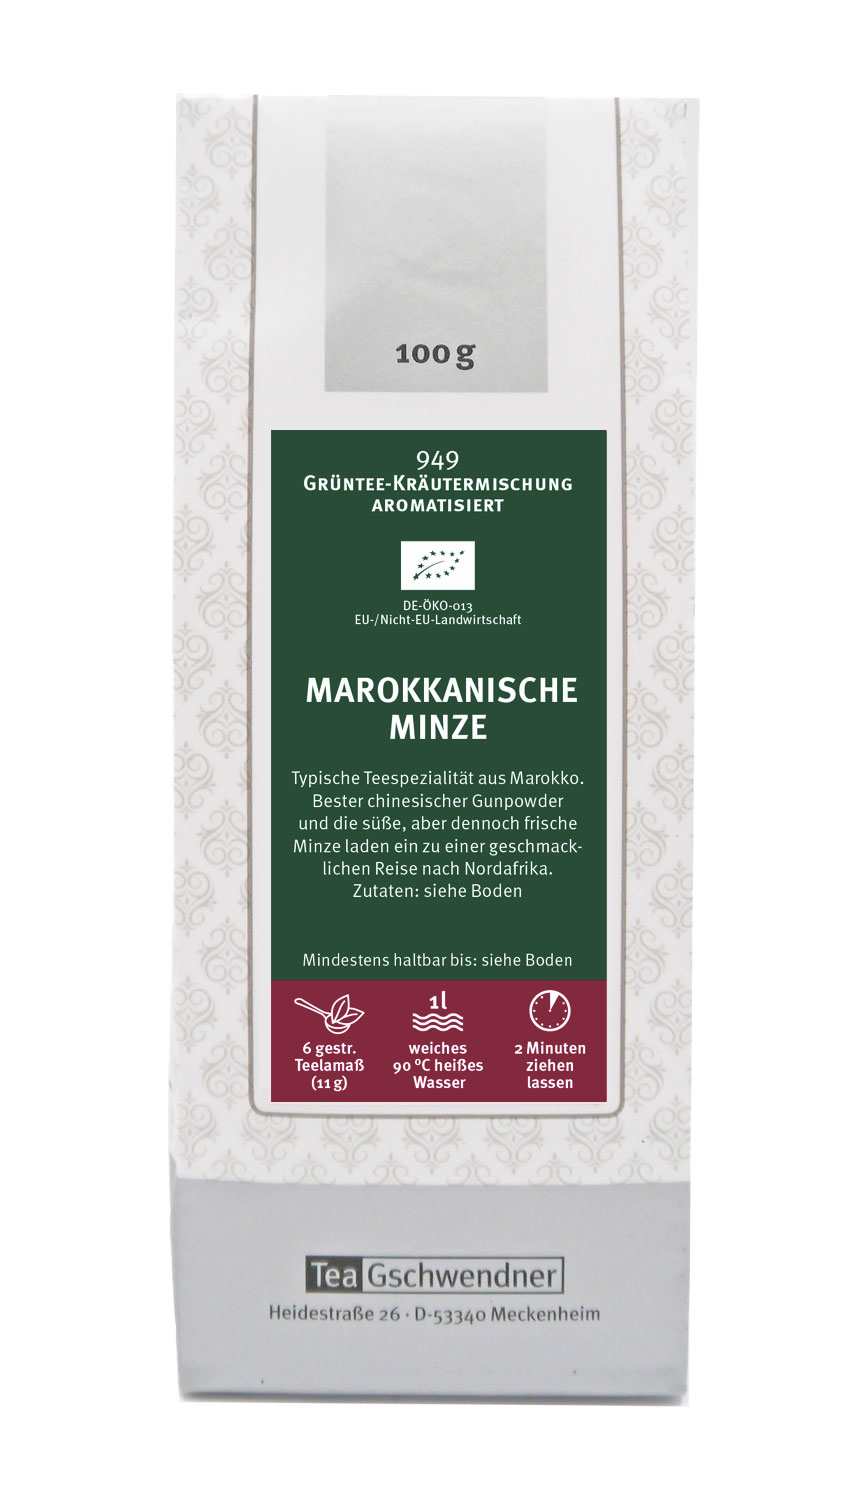 Morrocan Mint organic